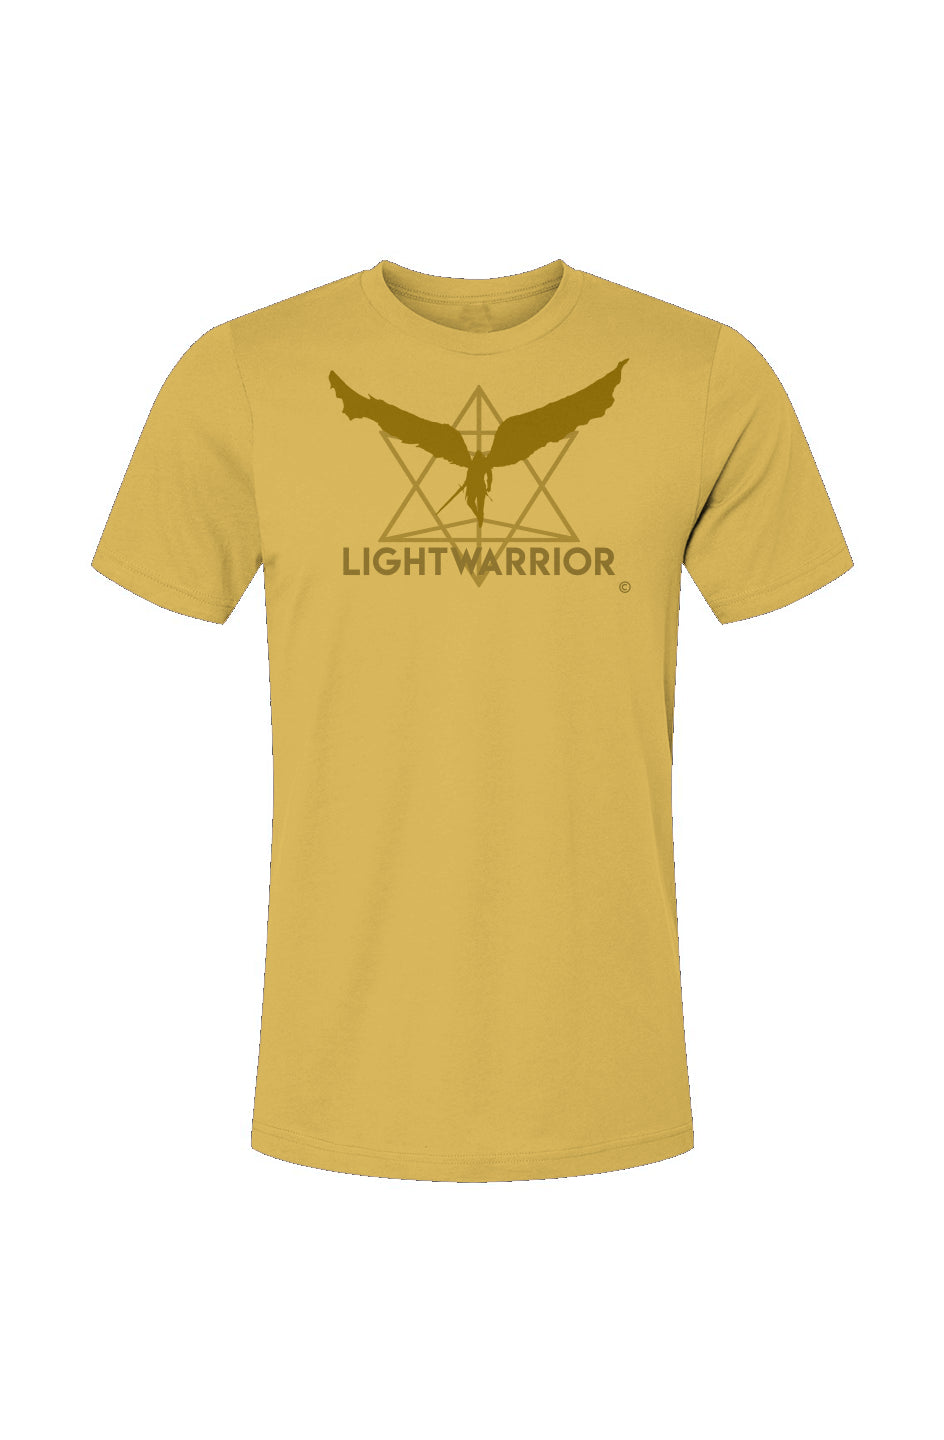 the lightwarrior collection: monochromatic unisex t-shirt